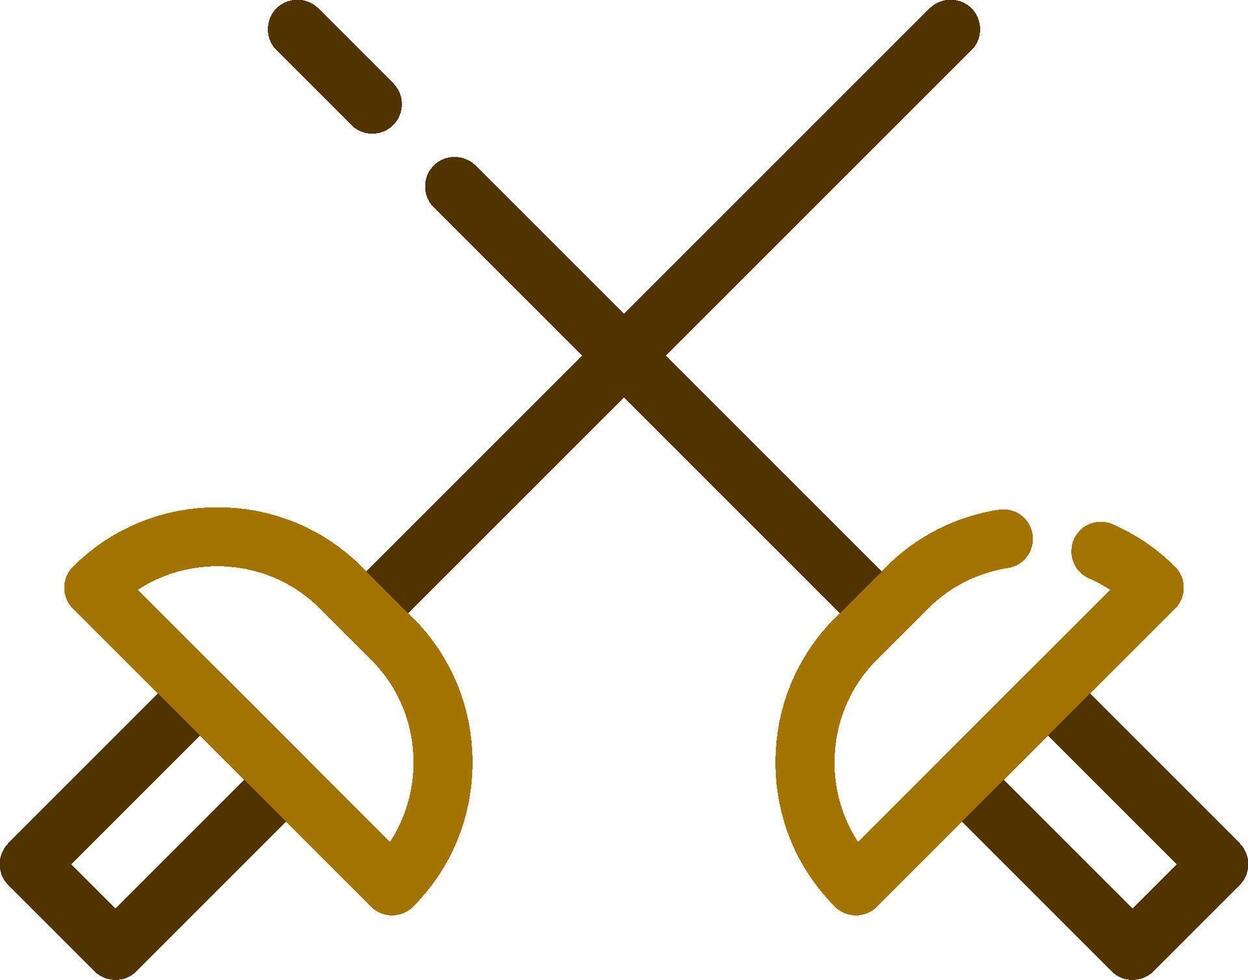 Swords Creative Icon Design vector